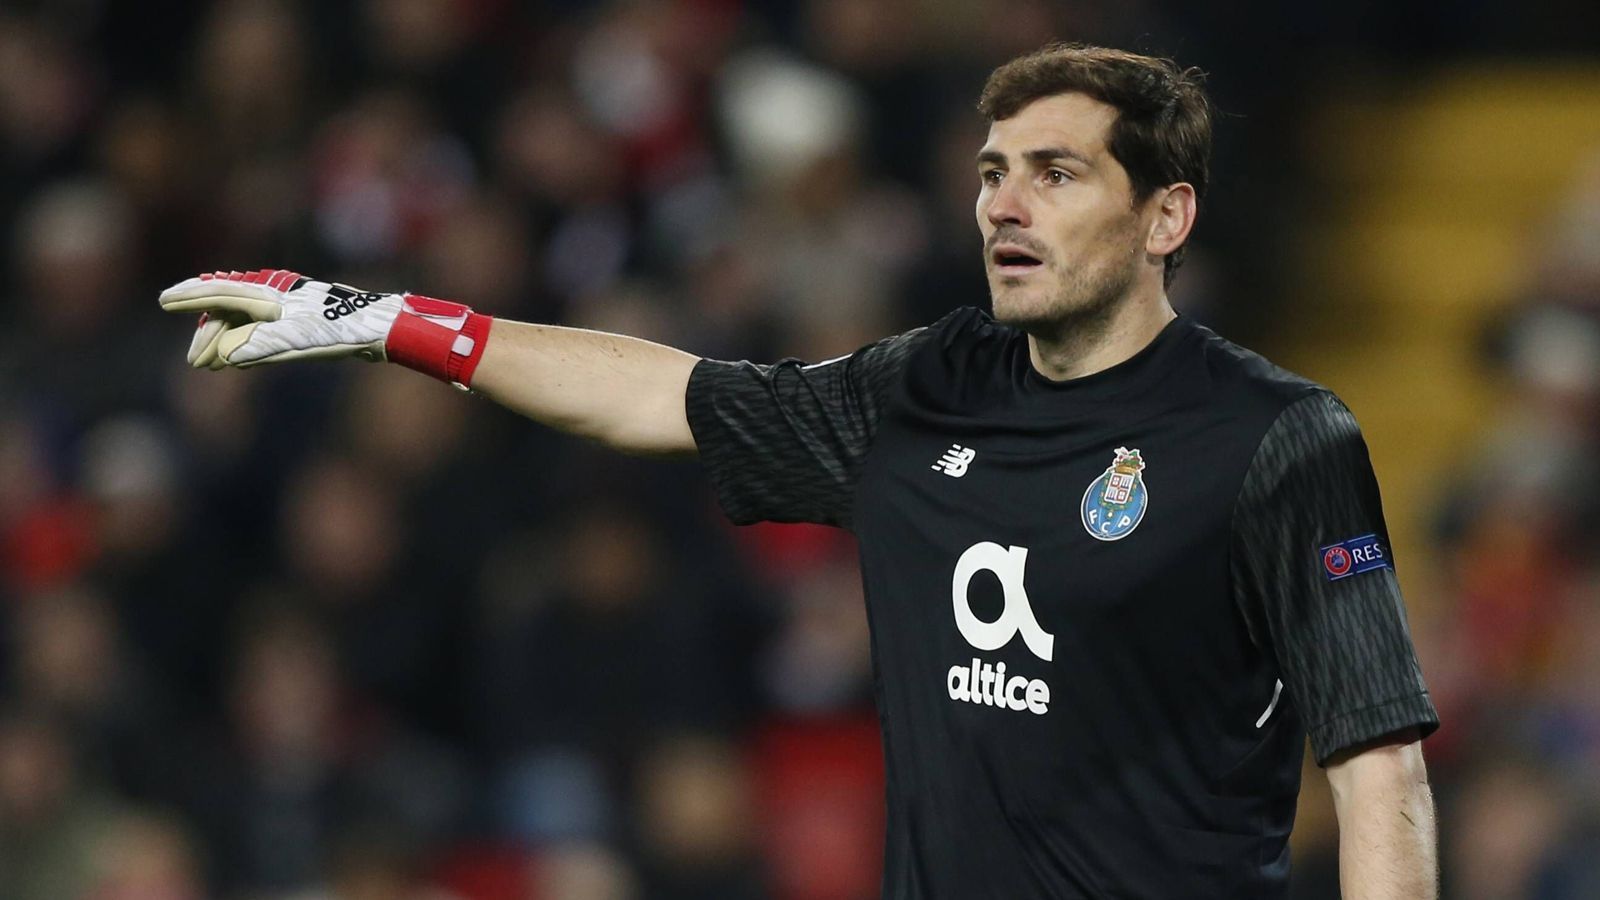 
                <strong>Topf 2: FC Porto (Meister in Portugal)</strong><br>
                Größter CL-Erfolg: Sieger 1987, 2004Trainer: Sergio ConceicaoTopstar: Iker Casillas (Bild)
              